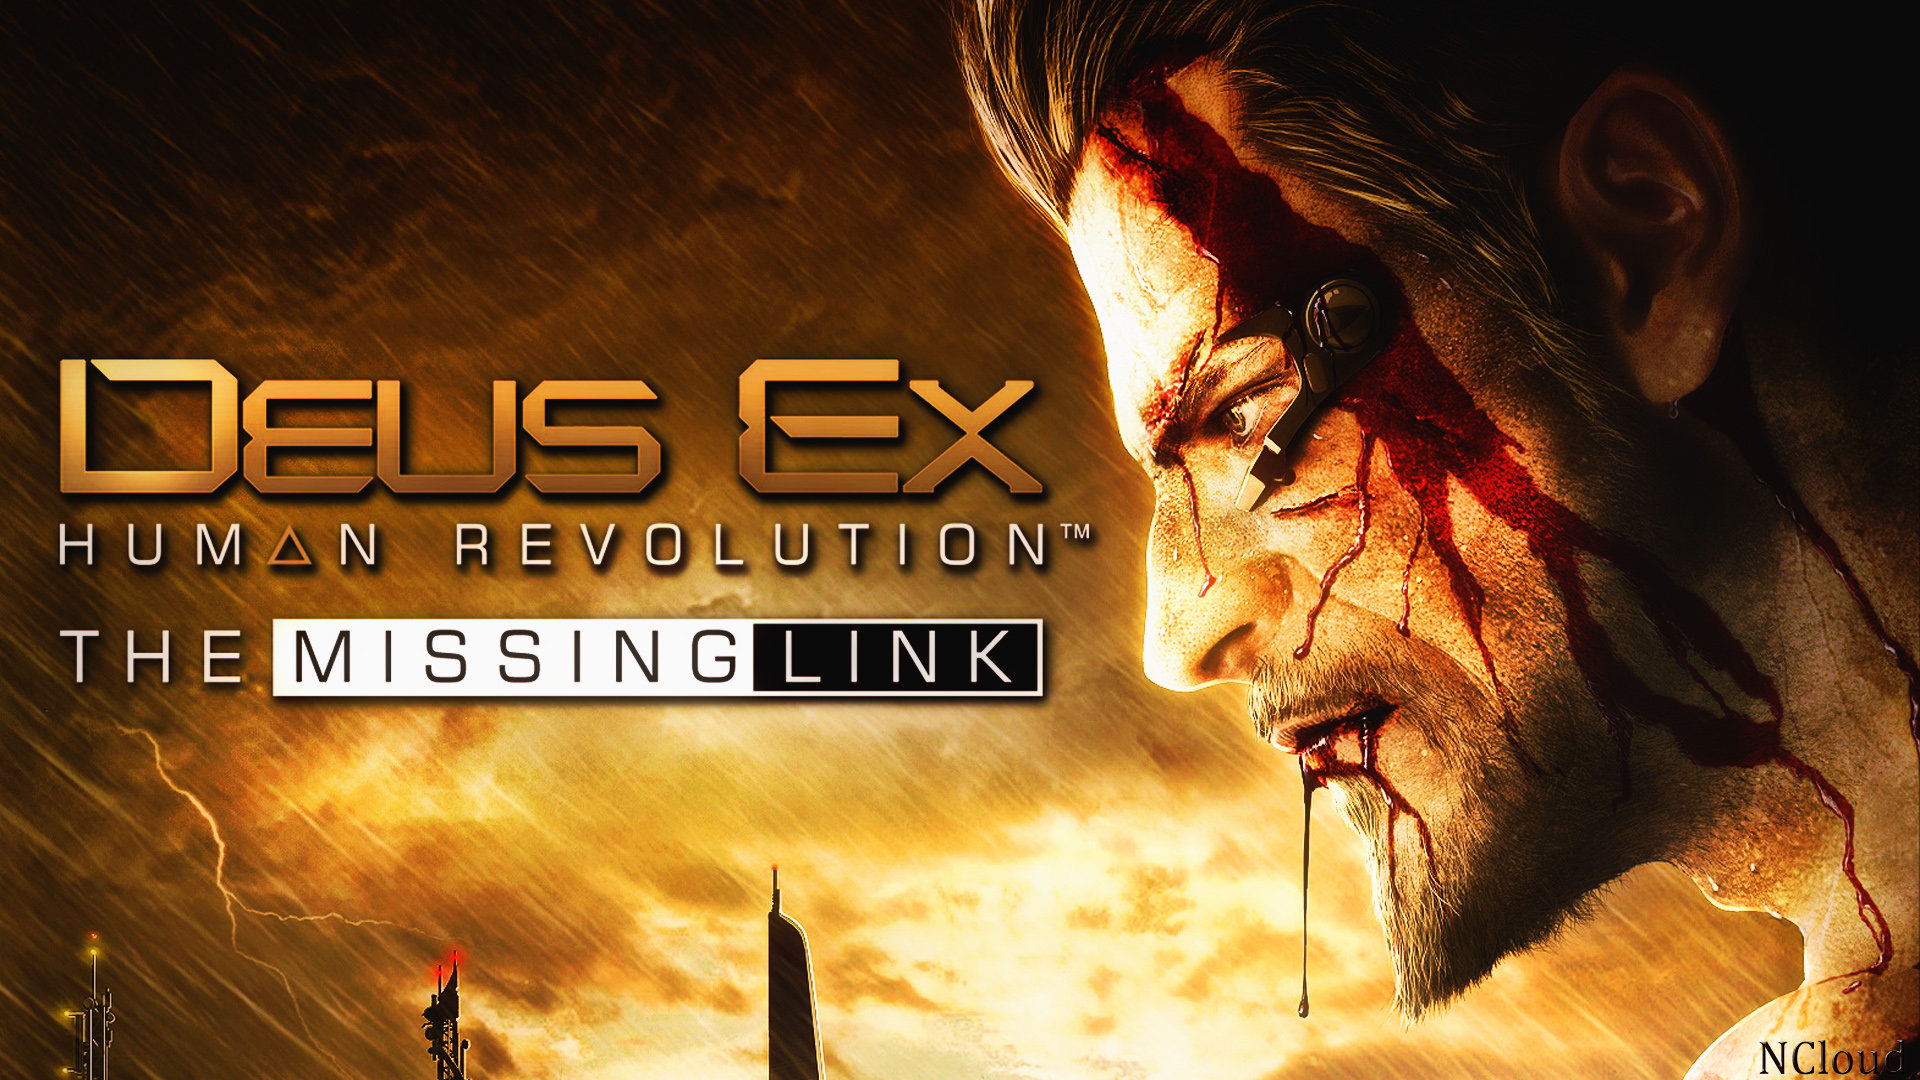 Best Deus Ex: Human Revolution wallpaper ID:158012 for High Resolution hd 1920x1080 desktop